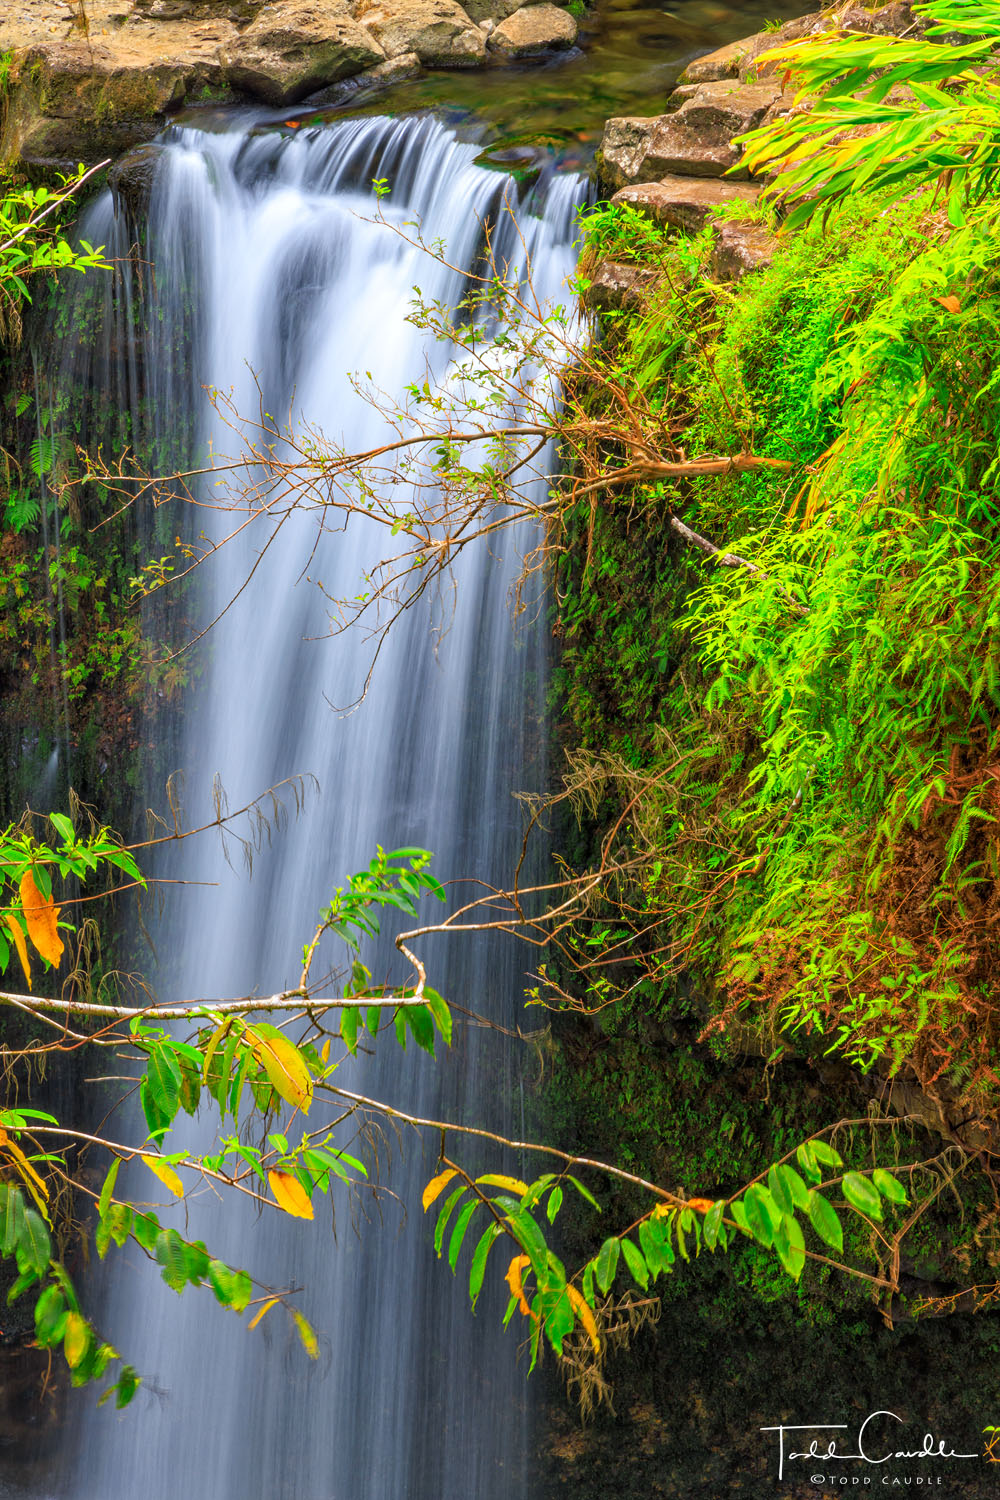 One of many waterfalls at Pua'a Ka'a State Wayside, along the beautiful Road to Hana.